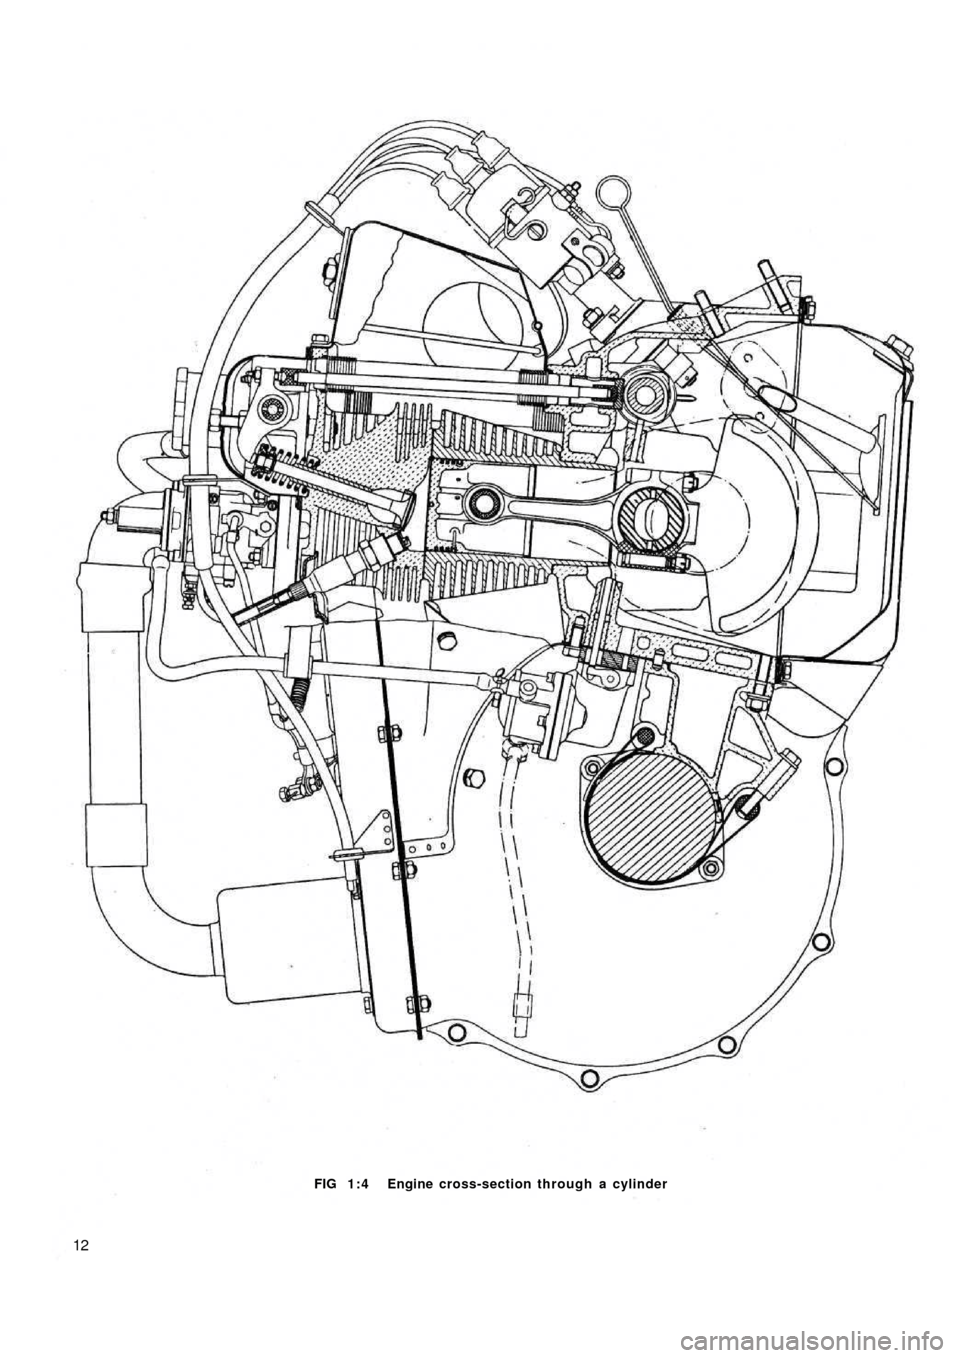 FIAT 500 1970 1.G Workshop Manual FIG 1 : 4  Engine cross-section through a cylinder
12 